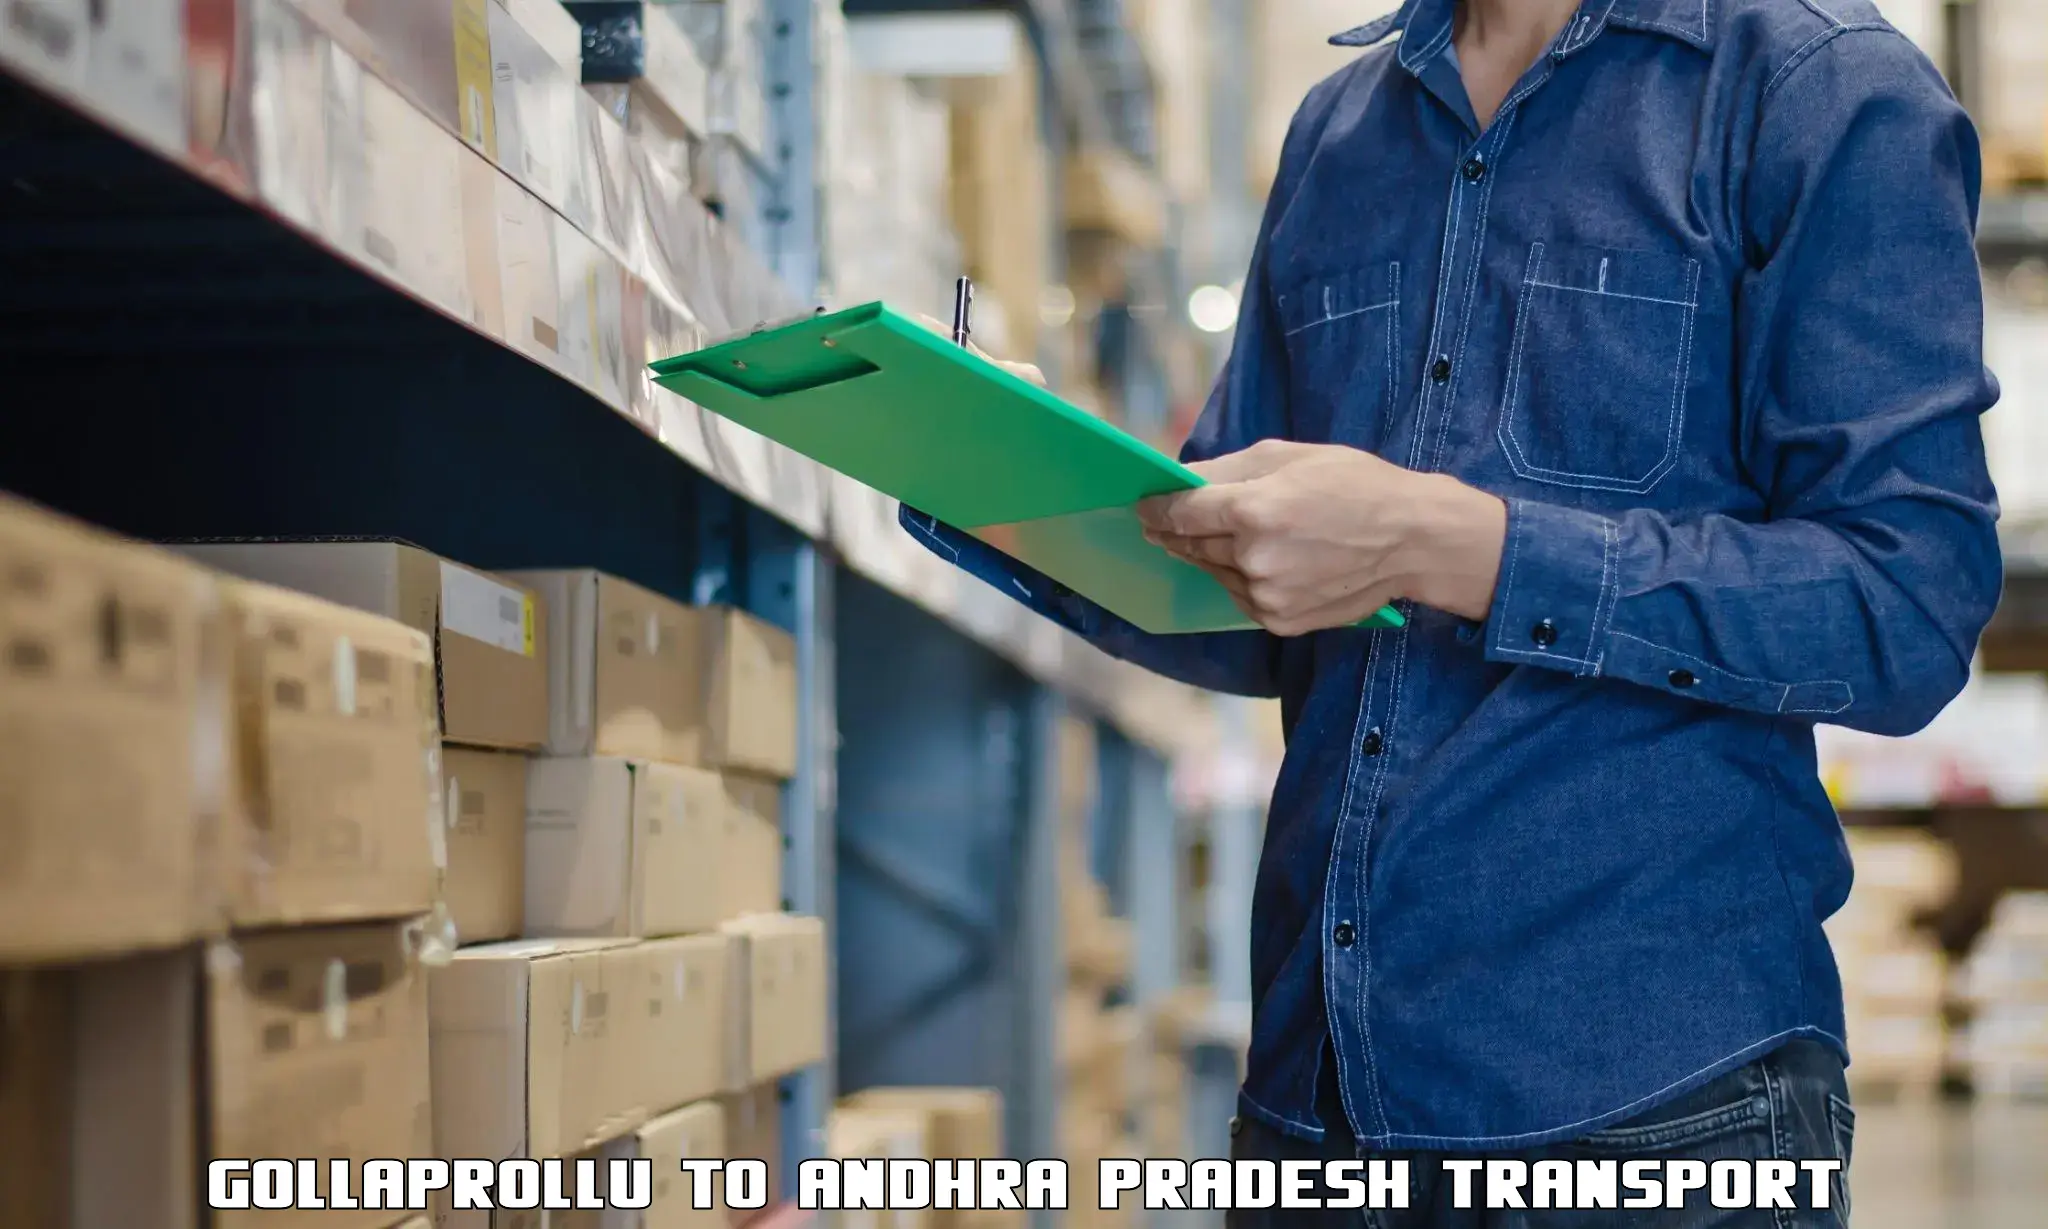 Cargo transport services Gollaprollu to Guntur